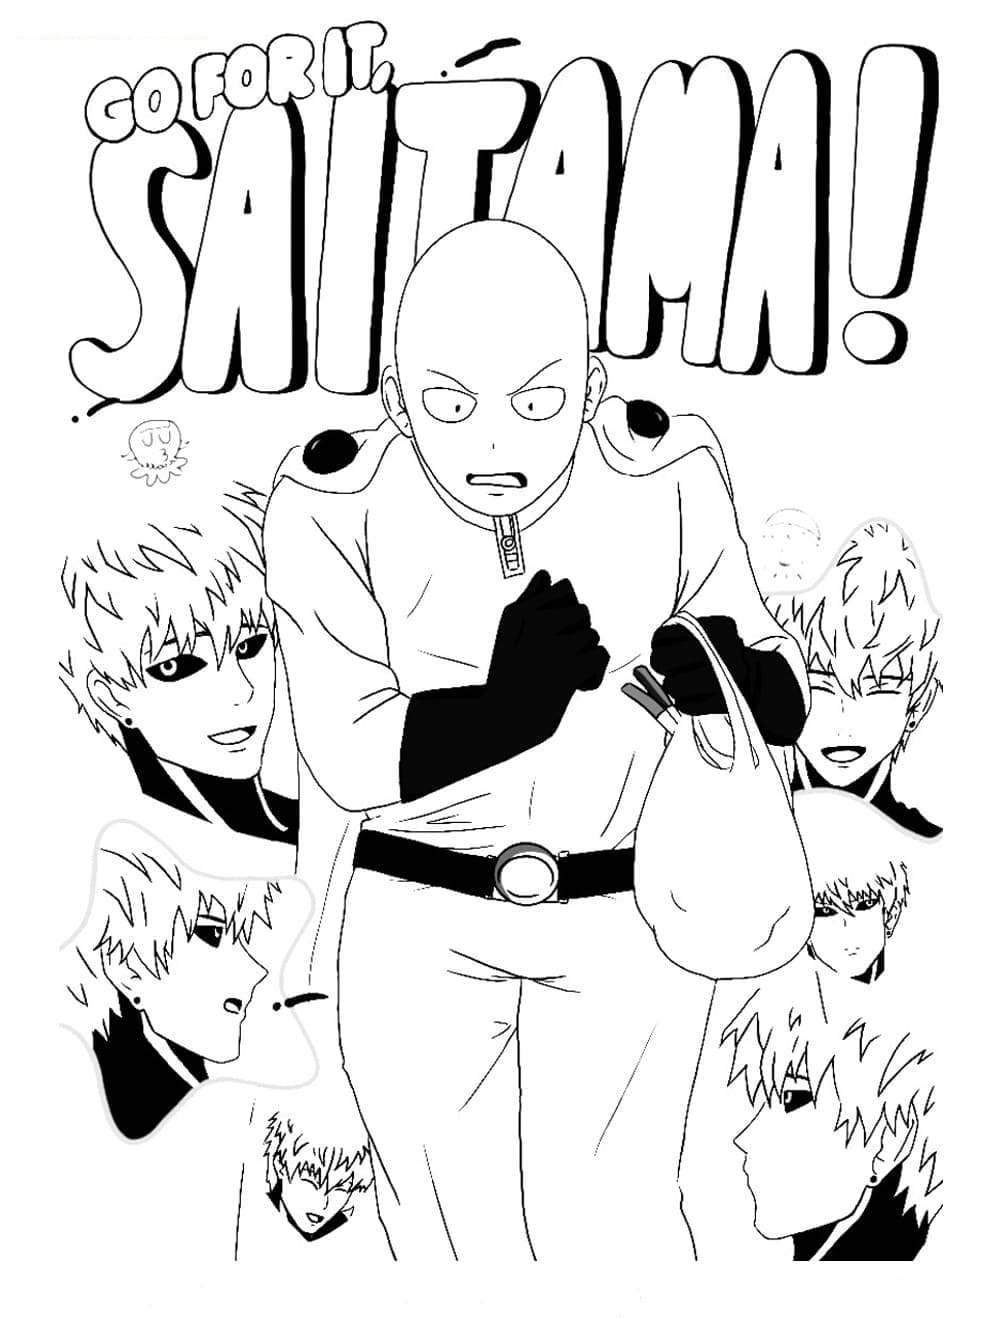 Saitama from Anime One Punch Man